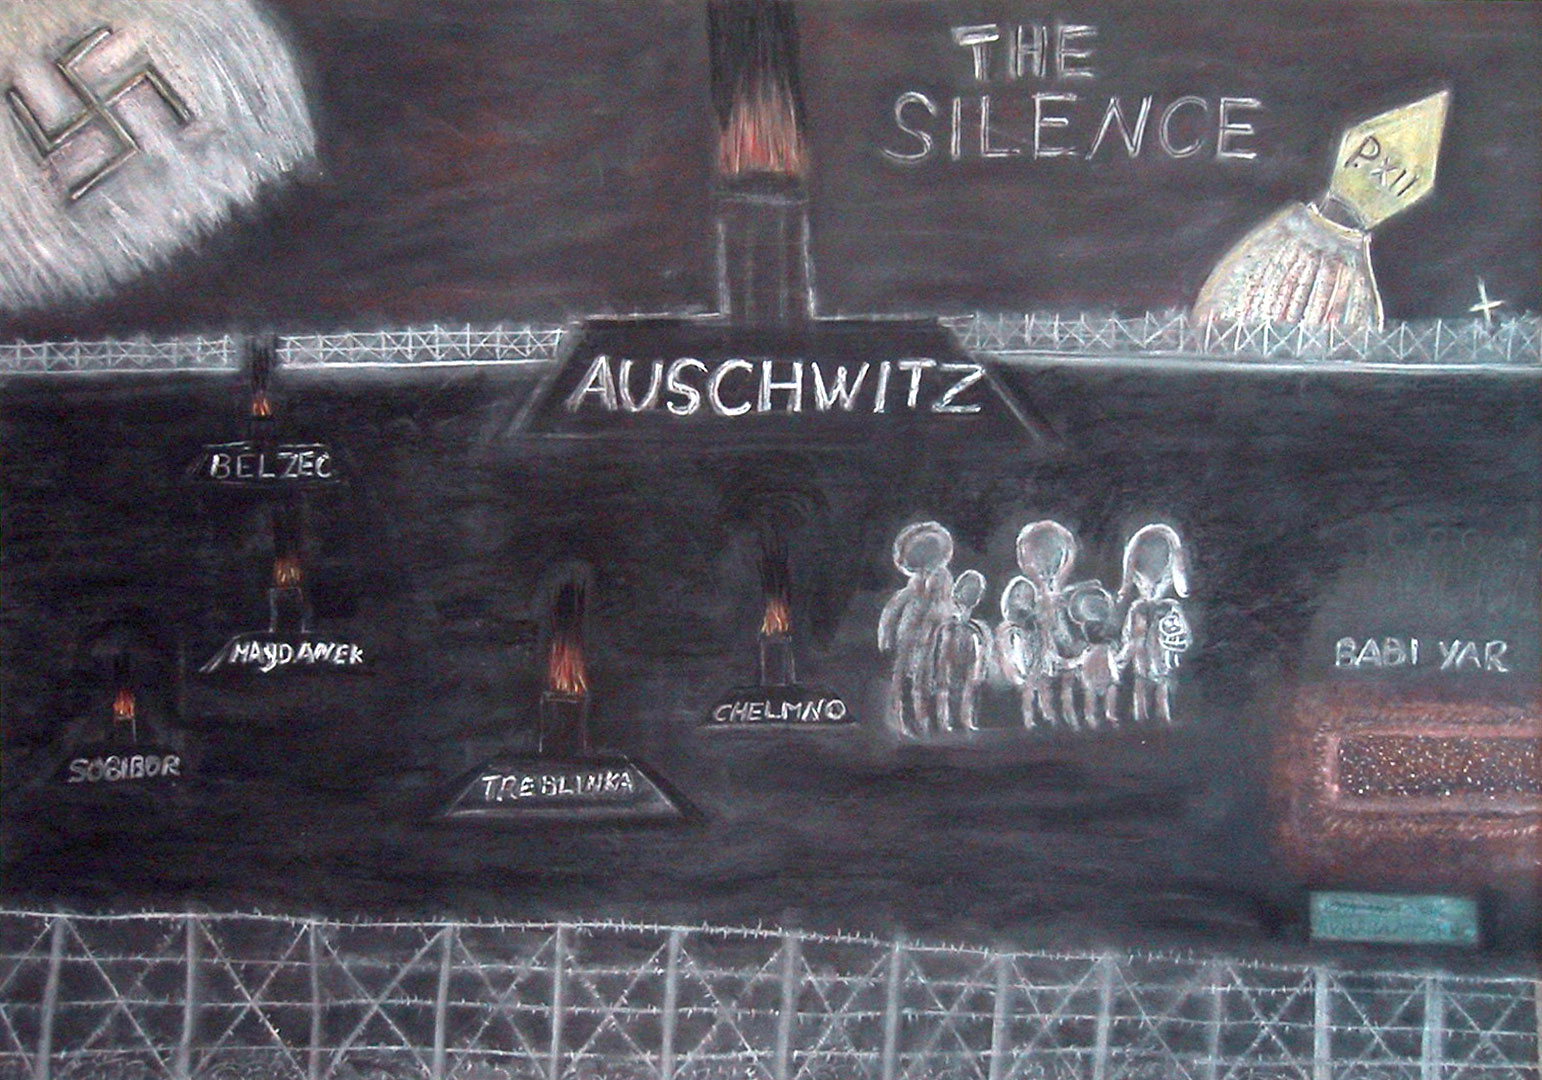 The Silence of Pius 12 - Oil on canvas, Miro Avrahami 1991